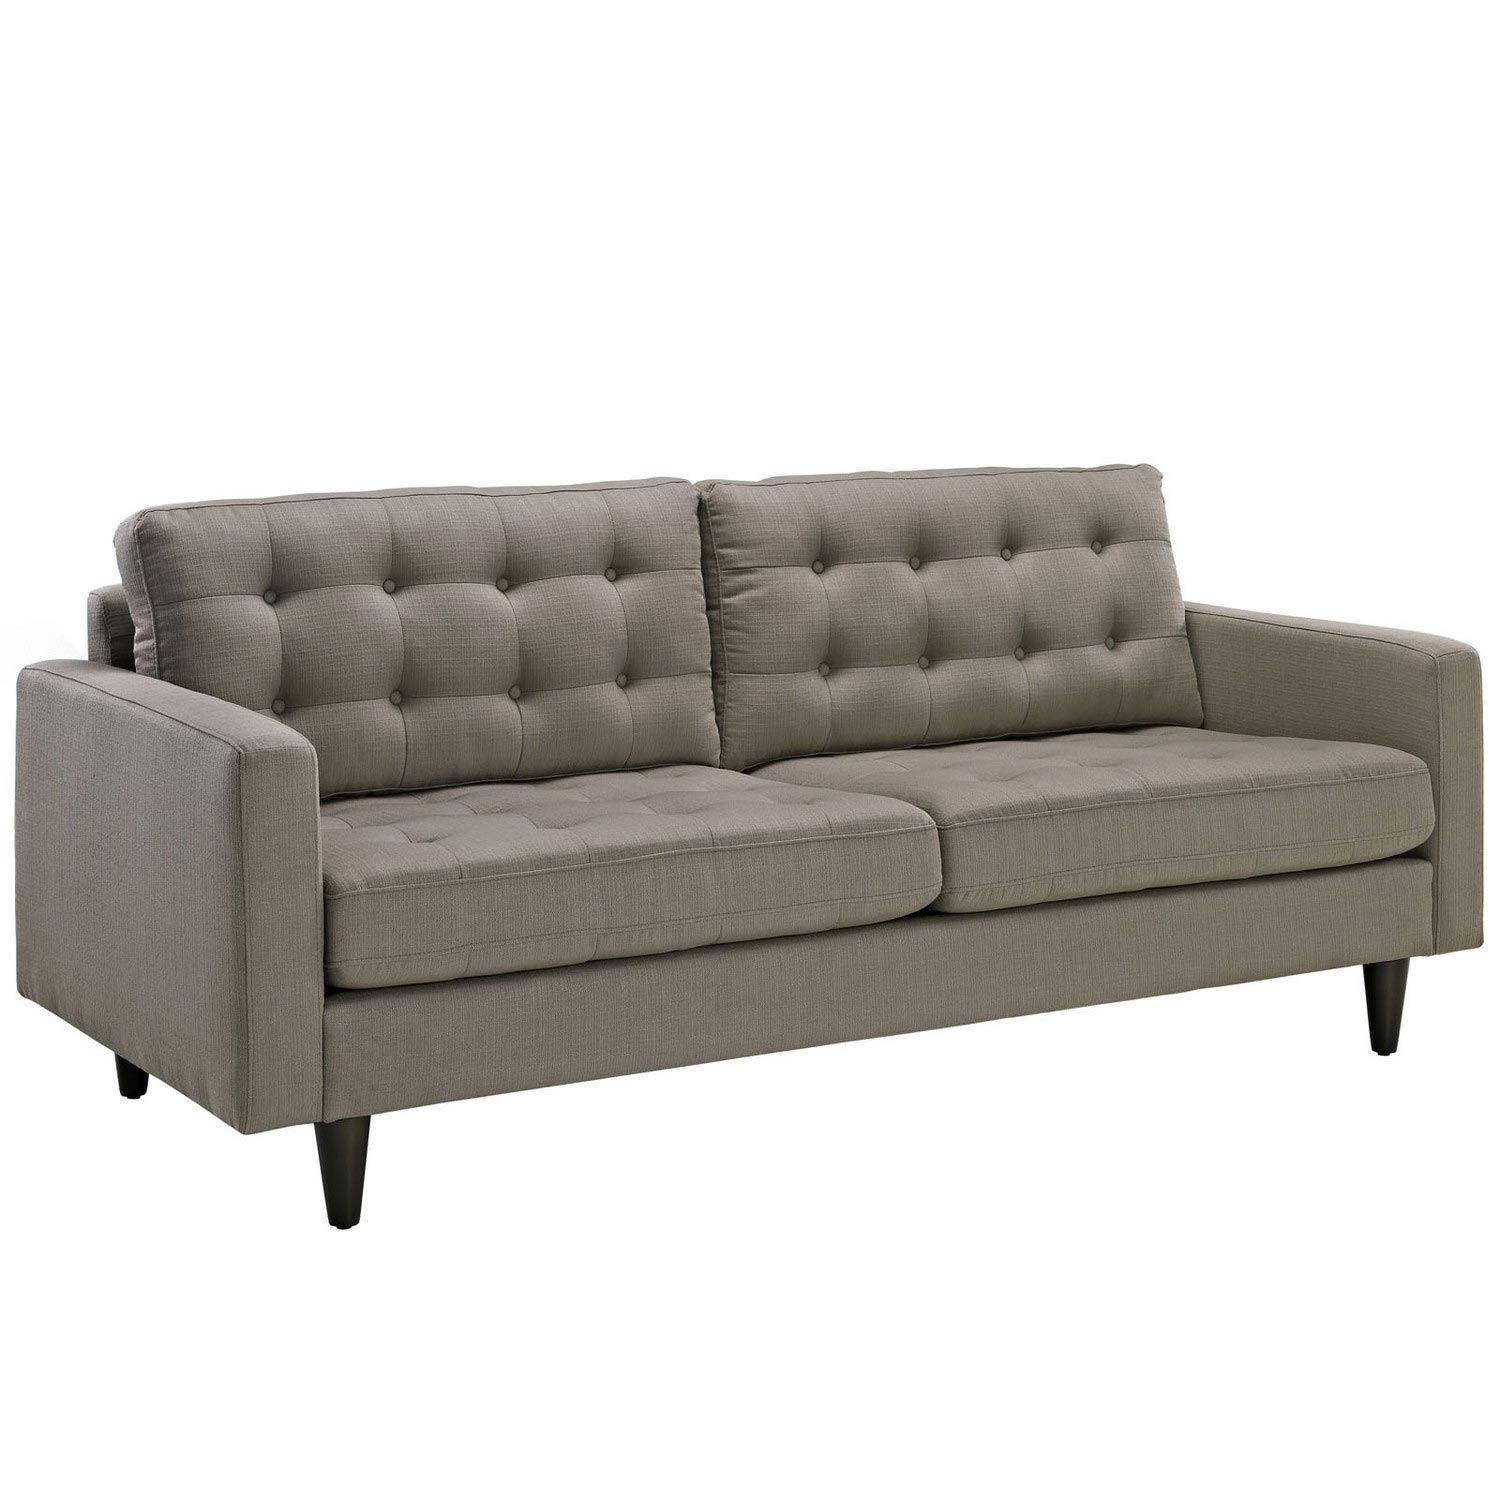 Modway Empress Upholstered Sofa - Granite